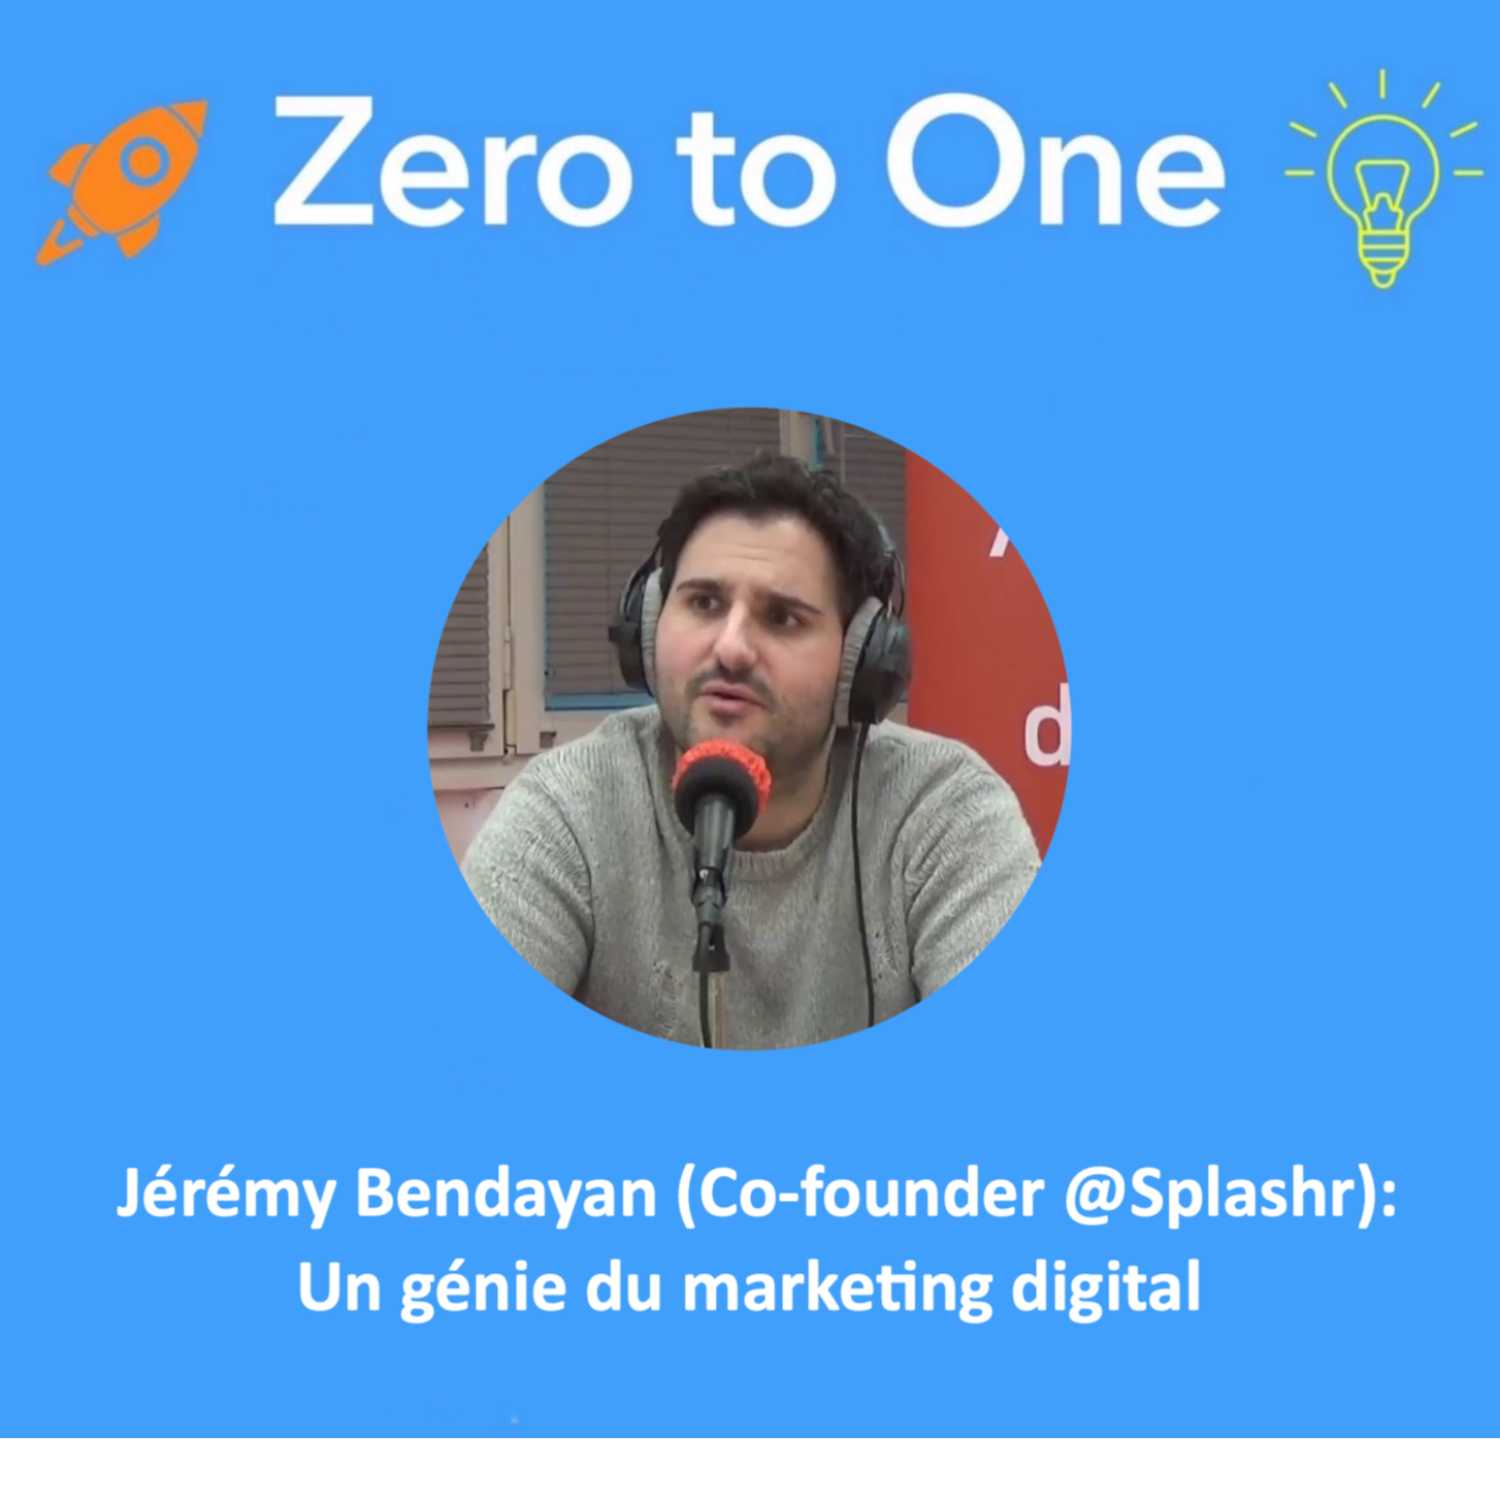 Jeremy Bendayan - Un génie du marketing digital 🧞‍♂️